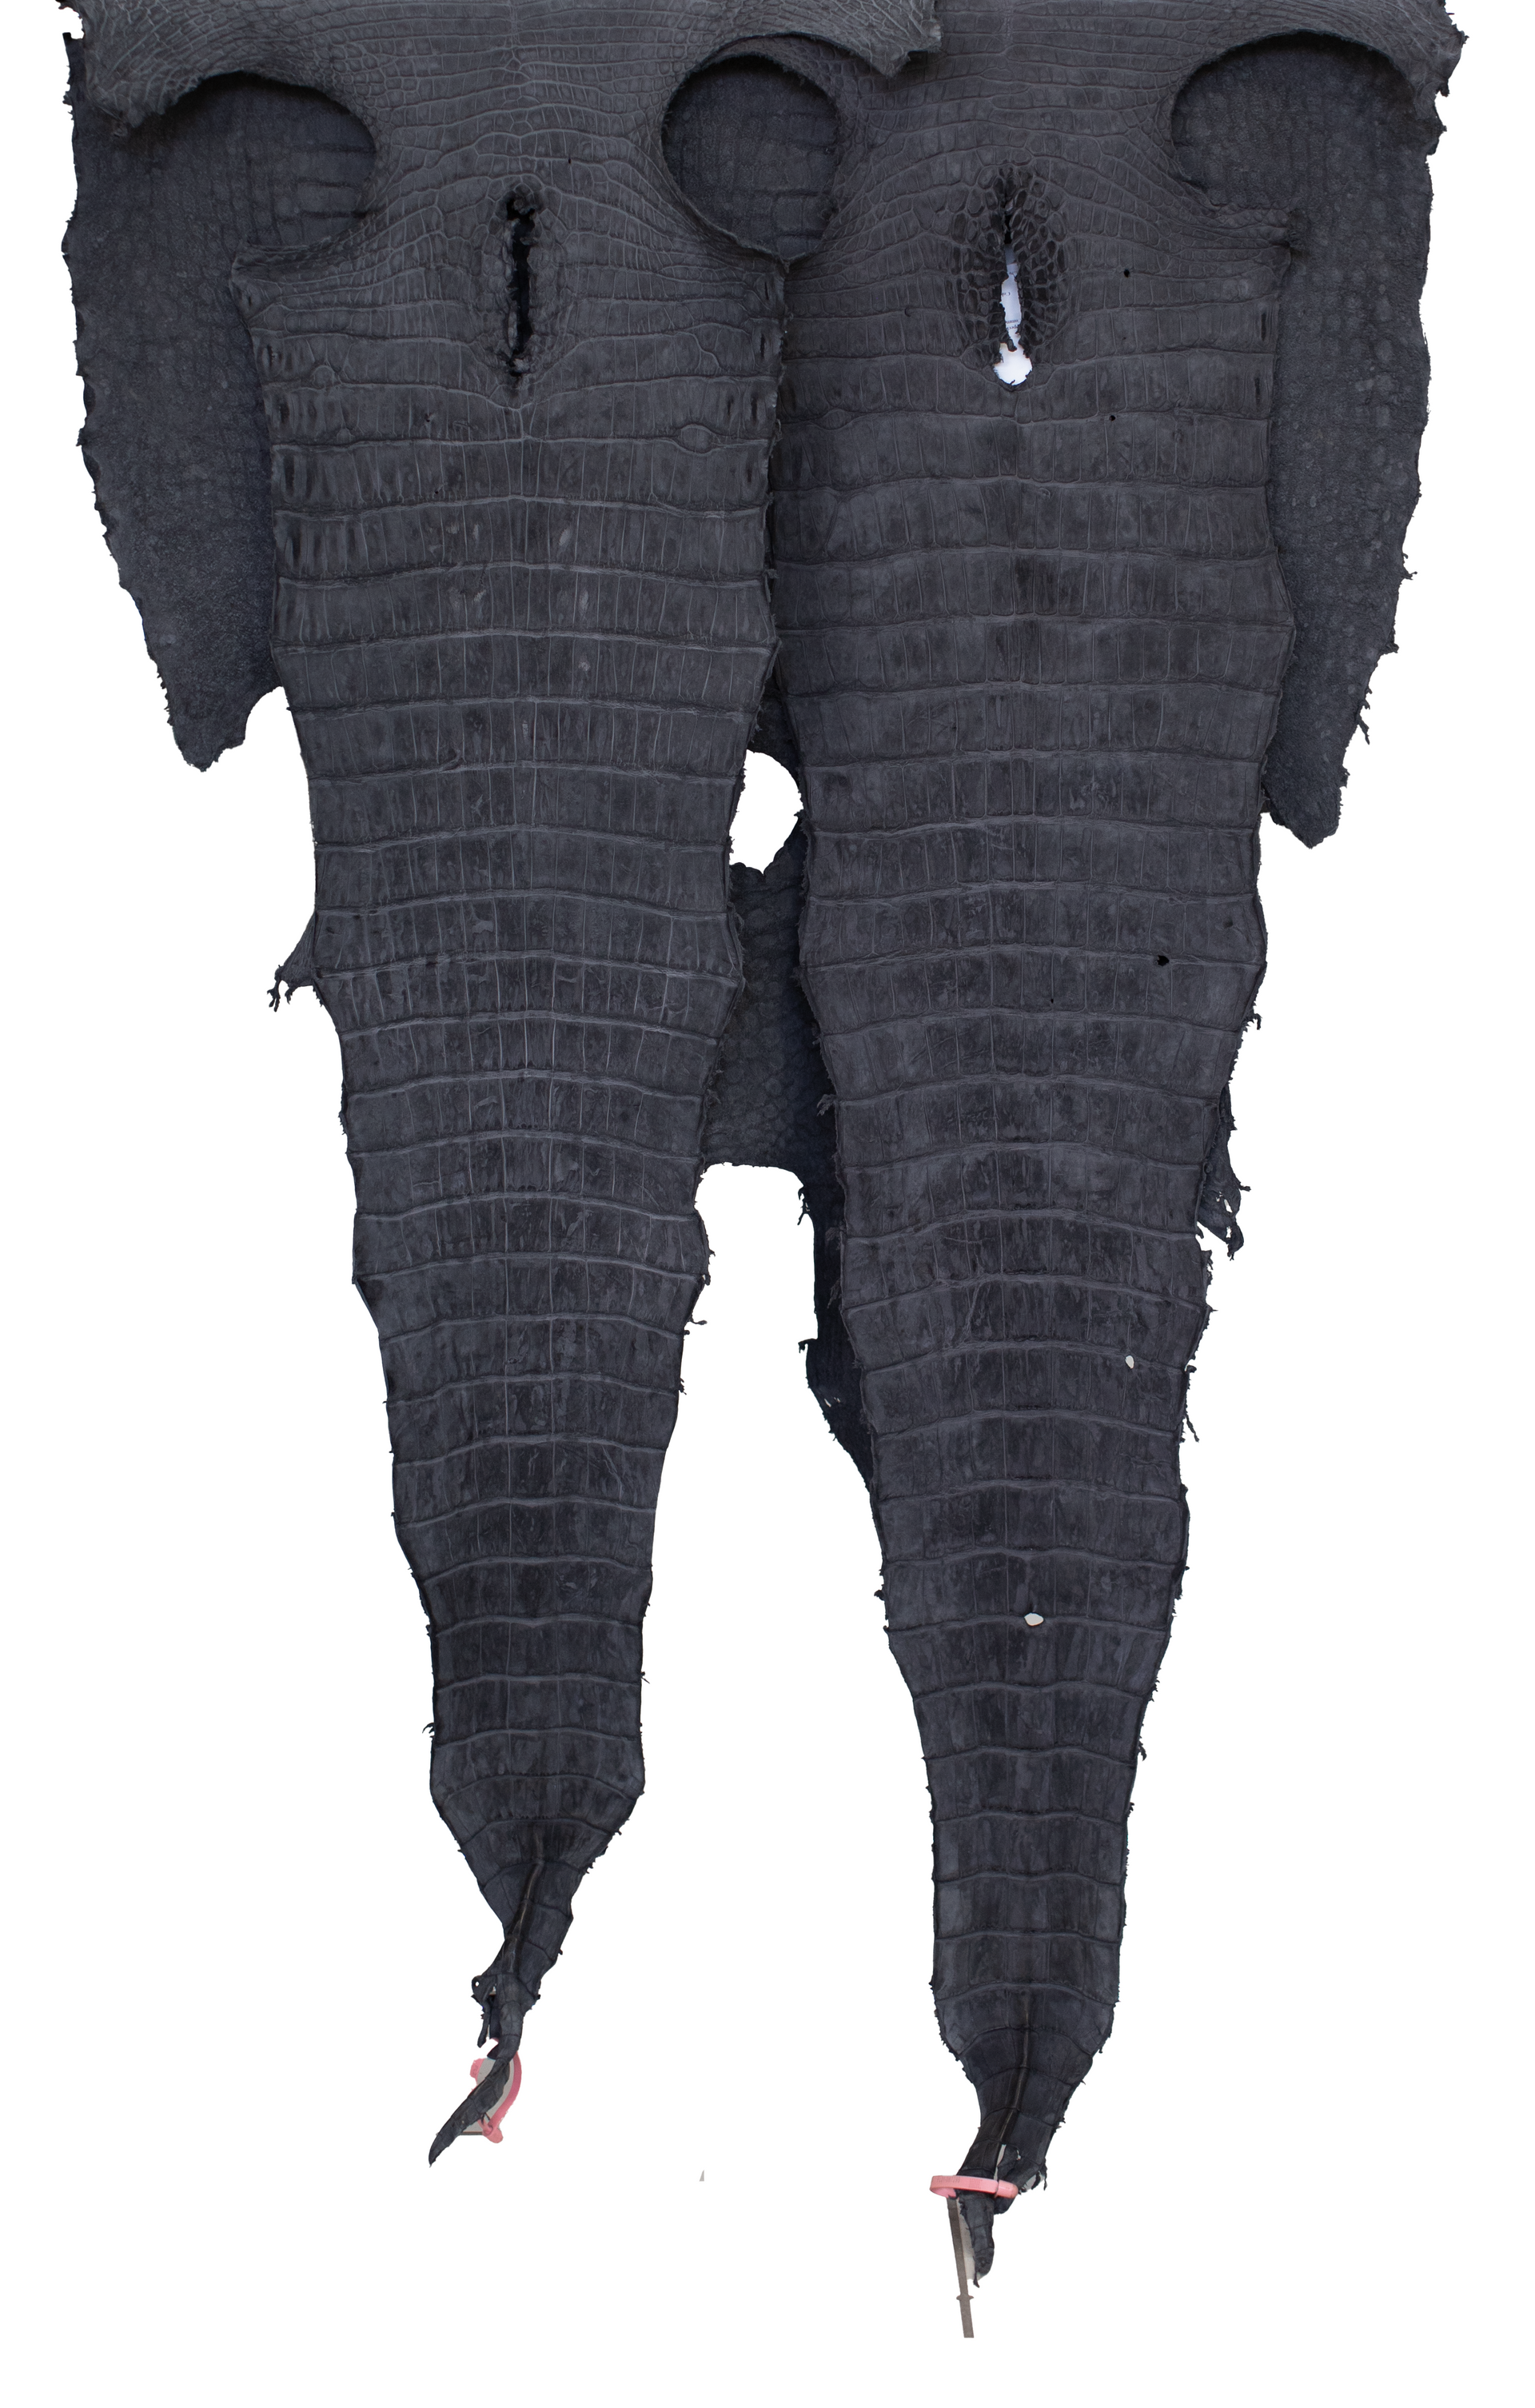 60-64 cm Grade 3/4 Anthracite Nubuck Wild American Alligator Leather